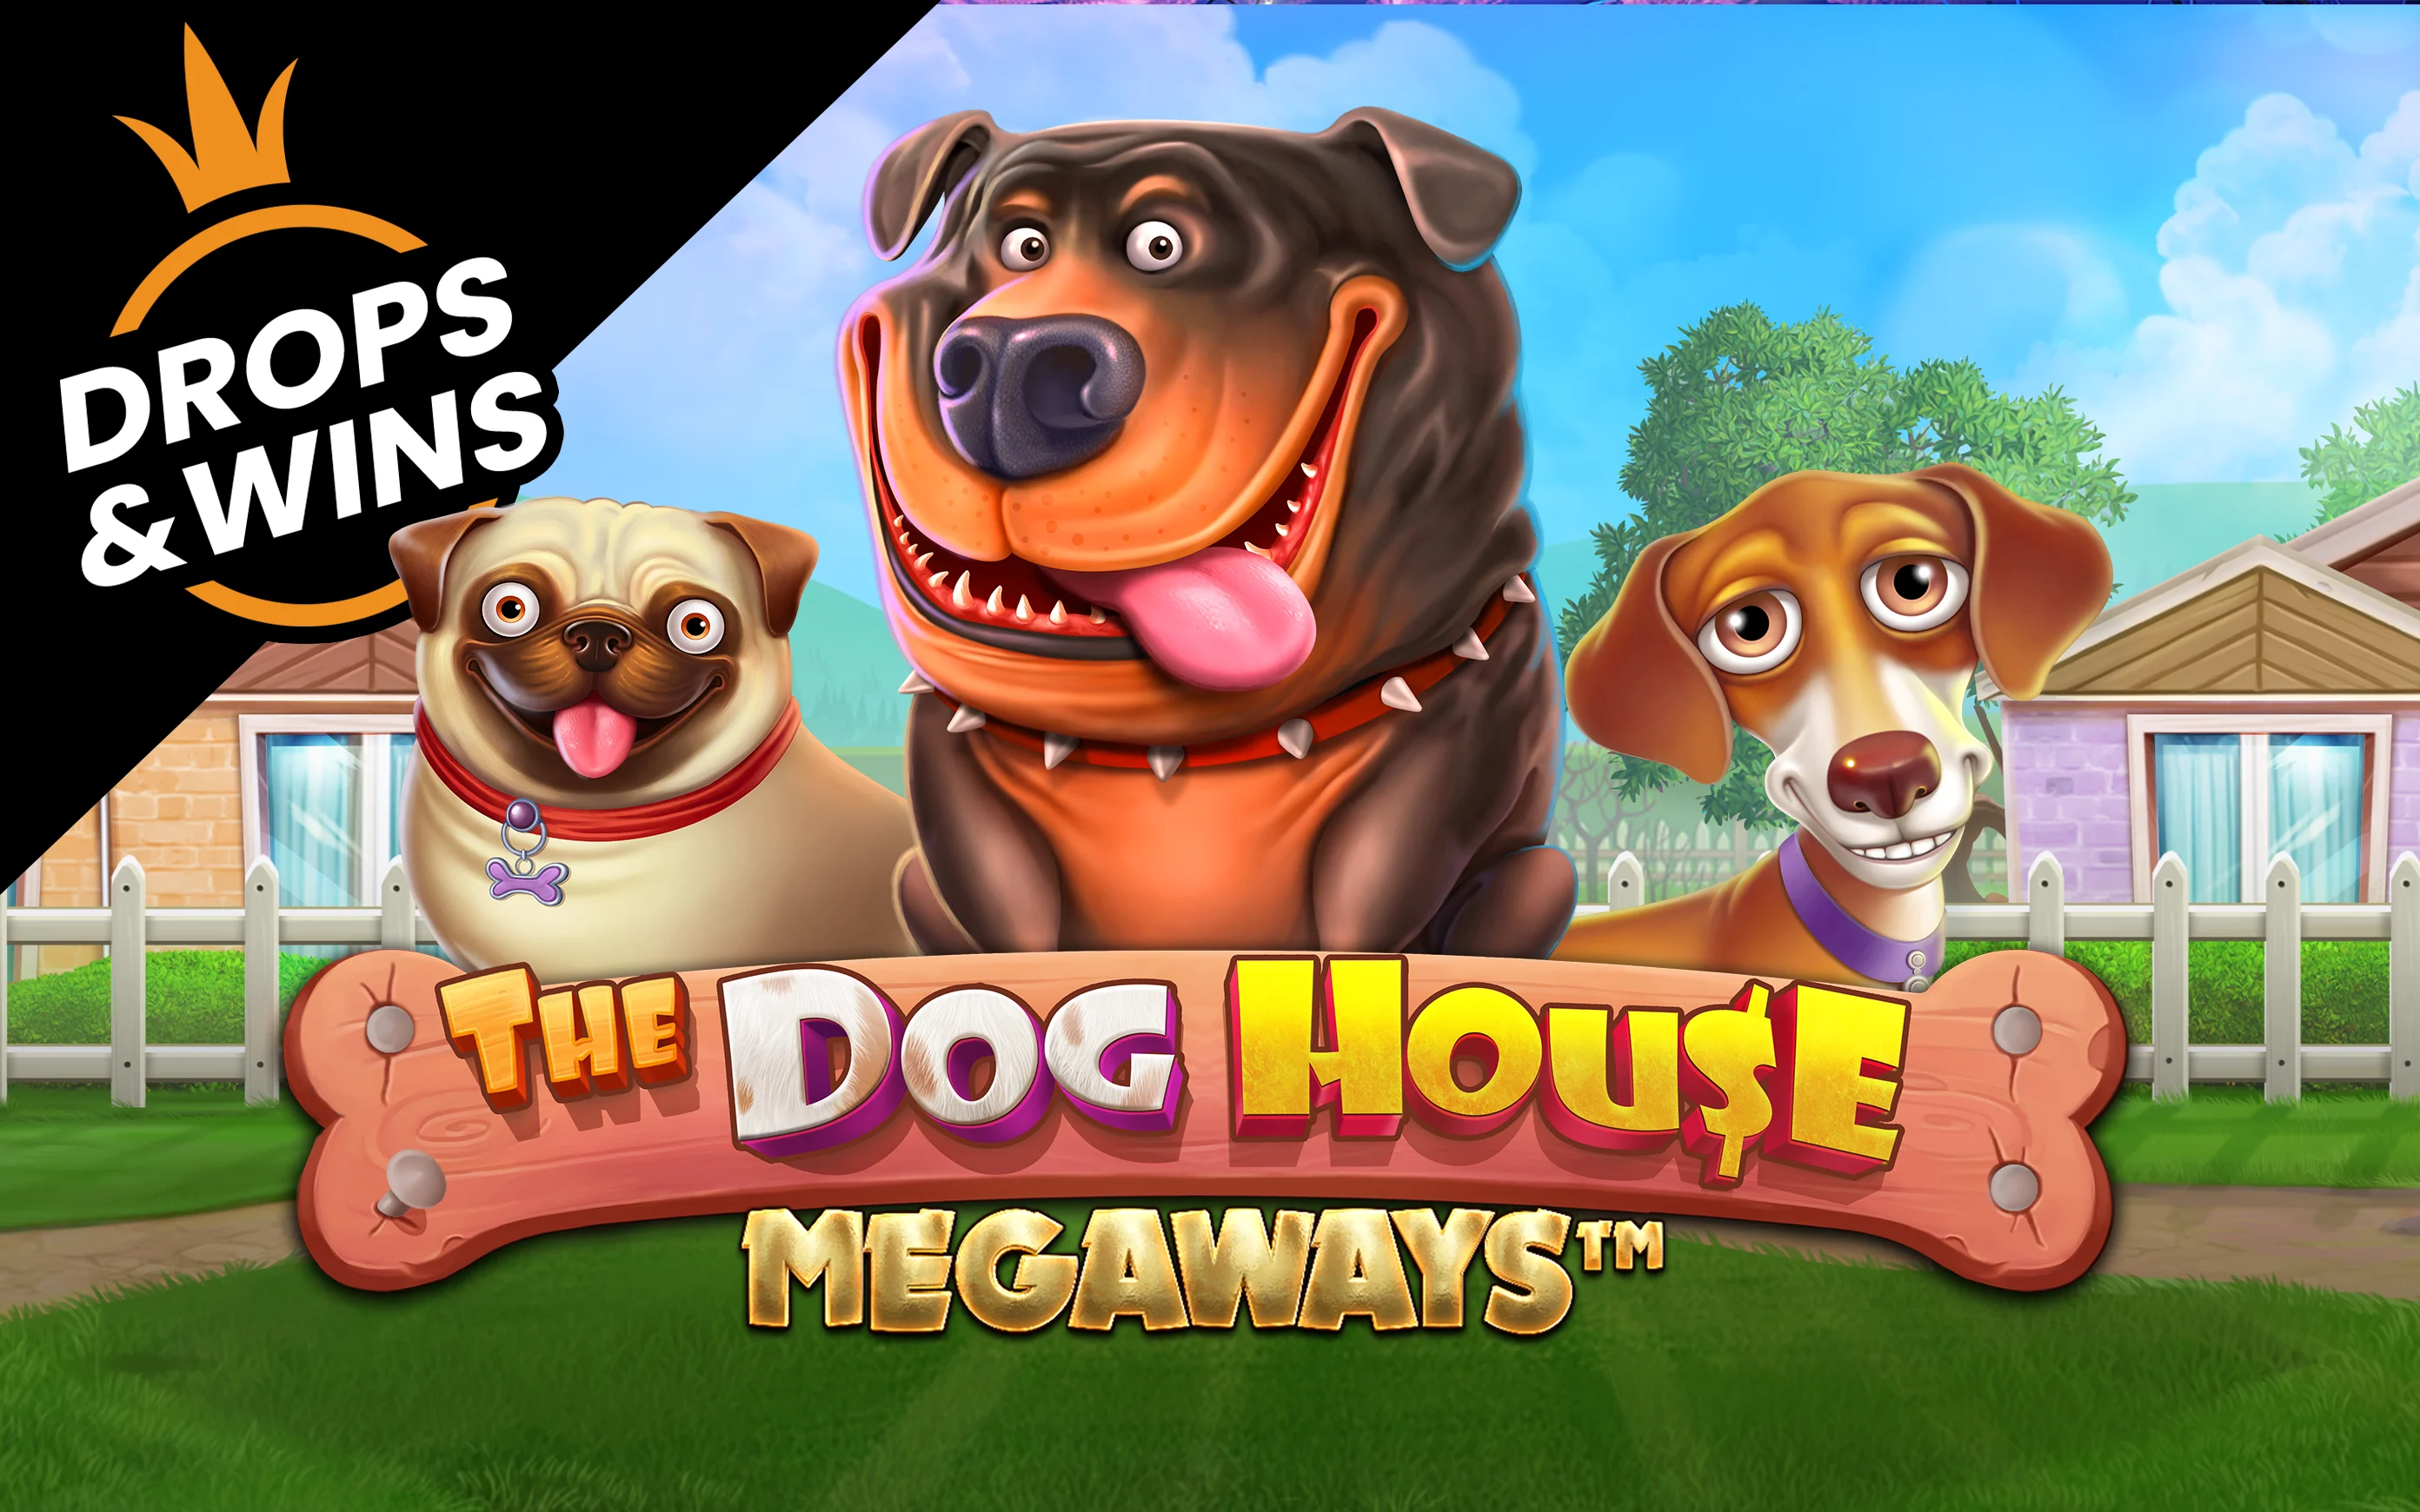 Joacă The Dog House Megaways™ în cazinoul online Starcasino.be